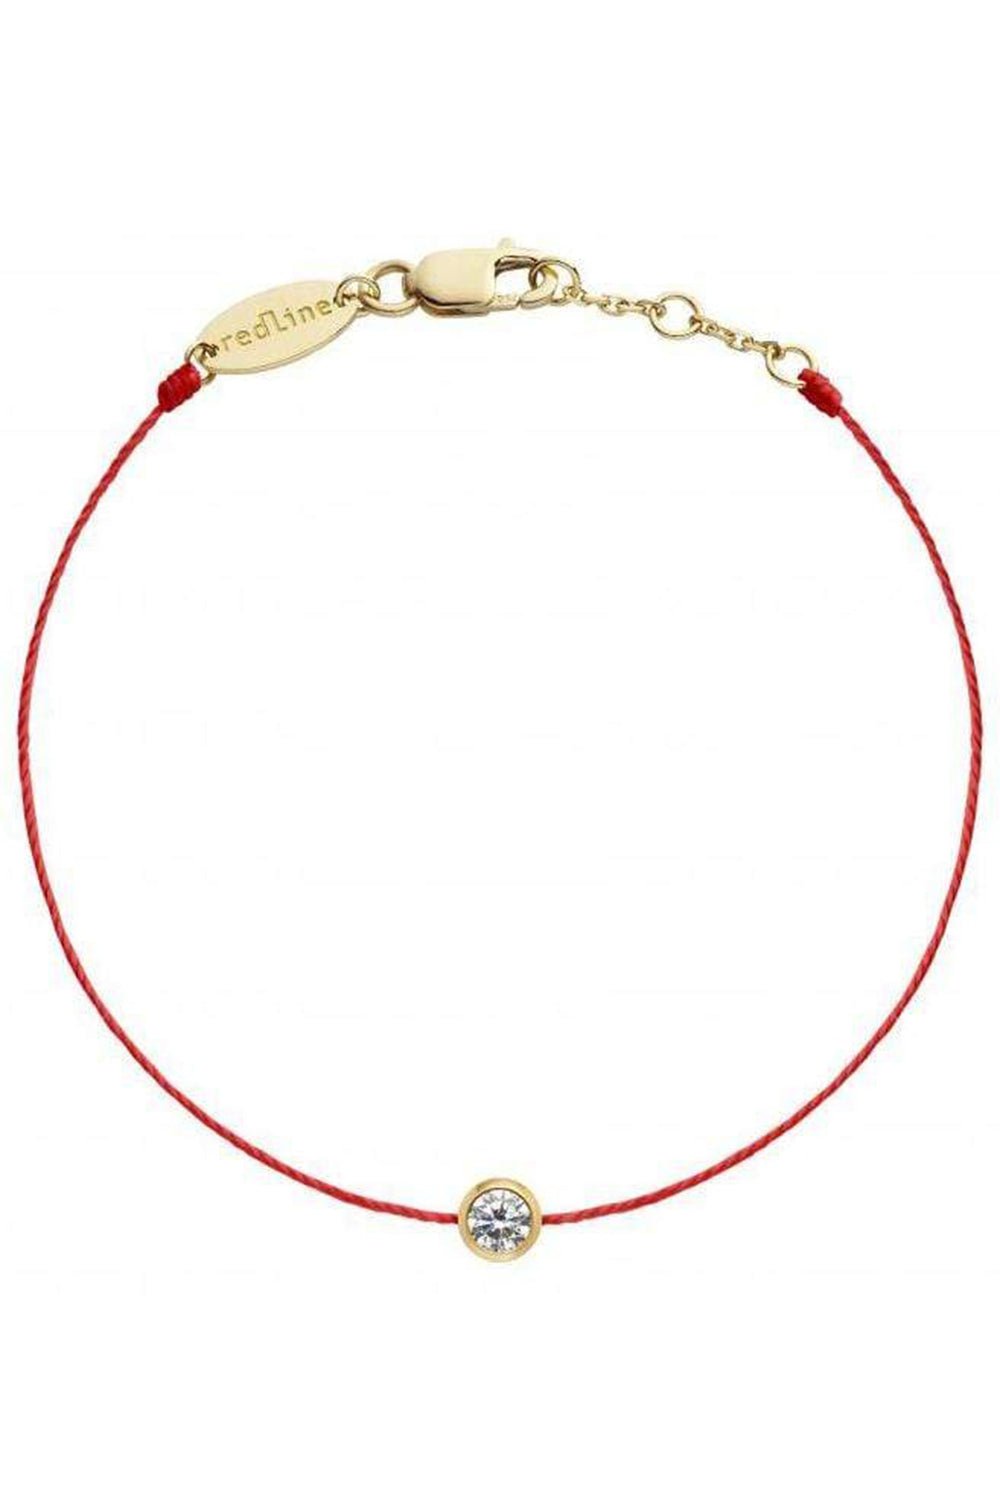 REDLINE-Yellow Gold Pure Diamond Red Cord Bracelet-